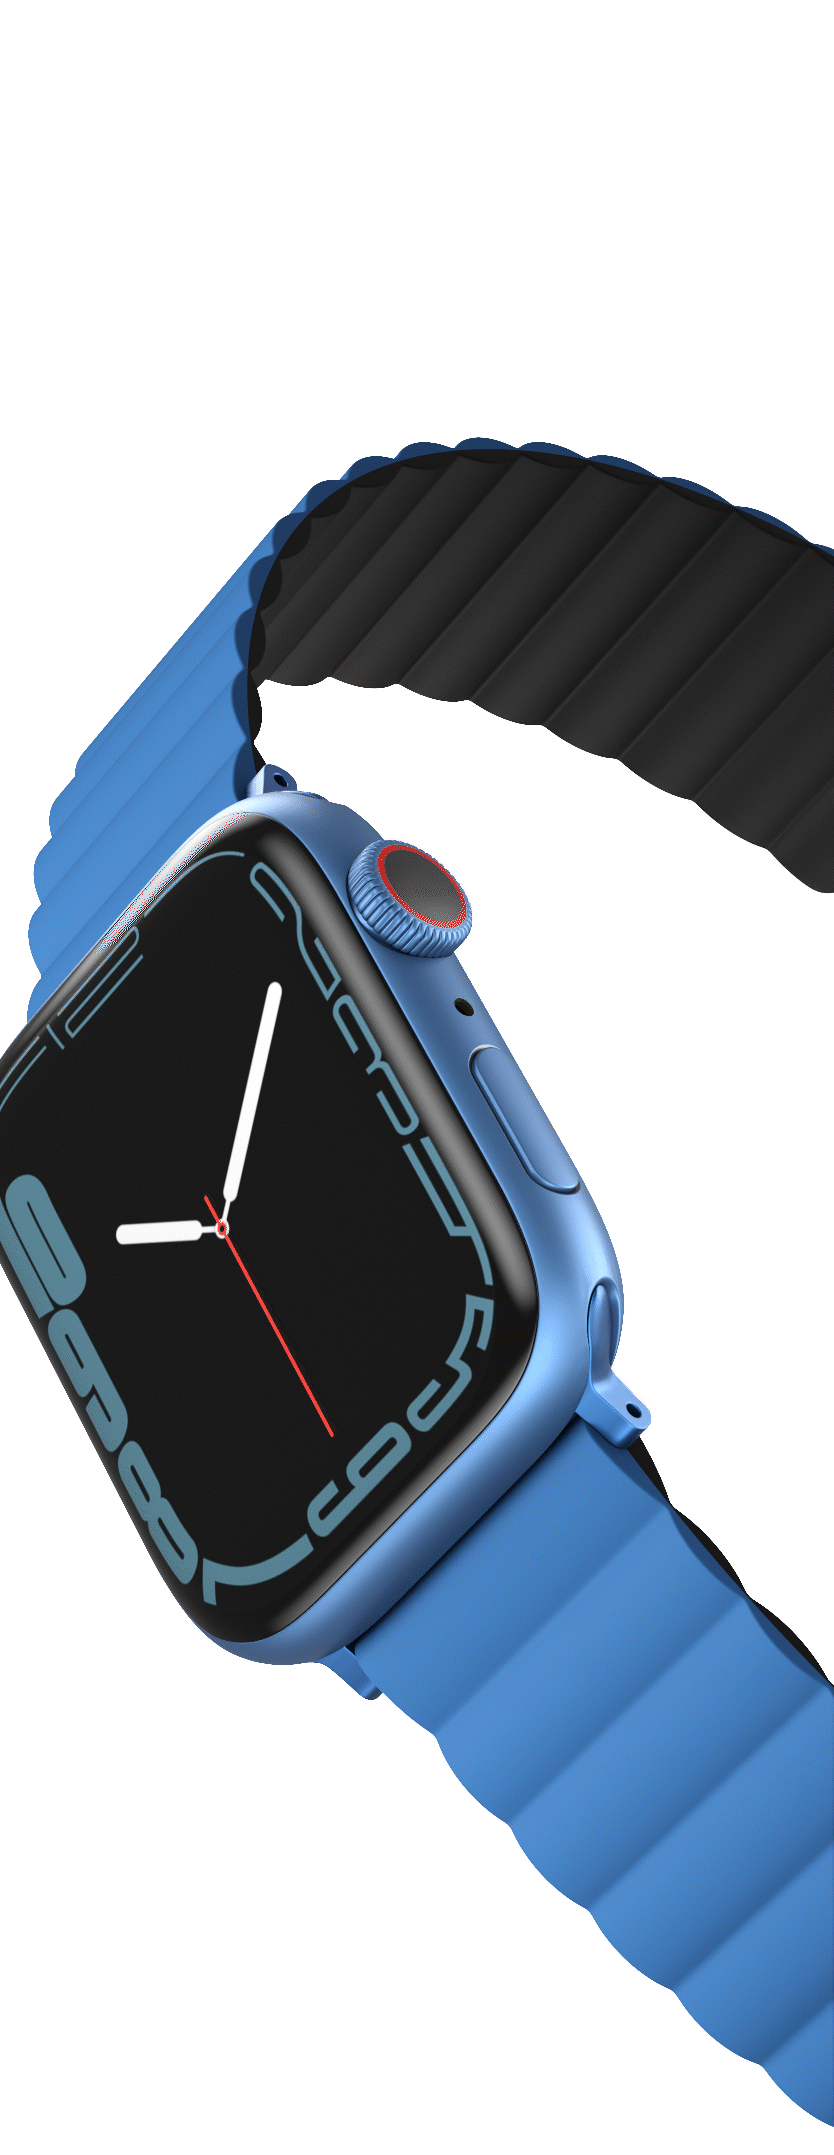 UNIQ Revix Reversible Magnetic Strap For Apple Watch Series 7